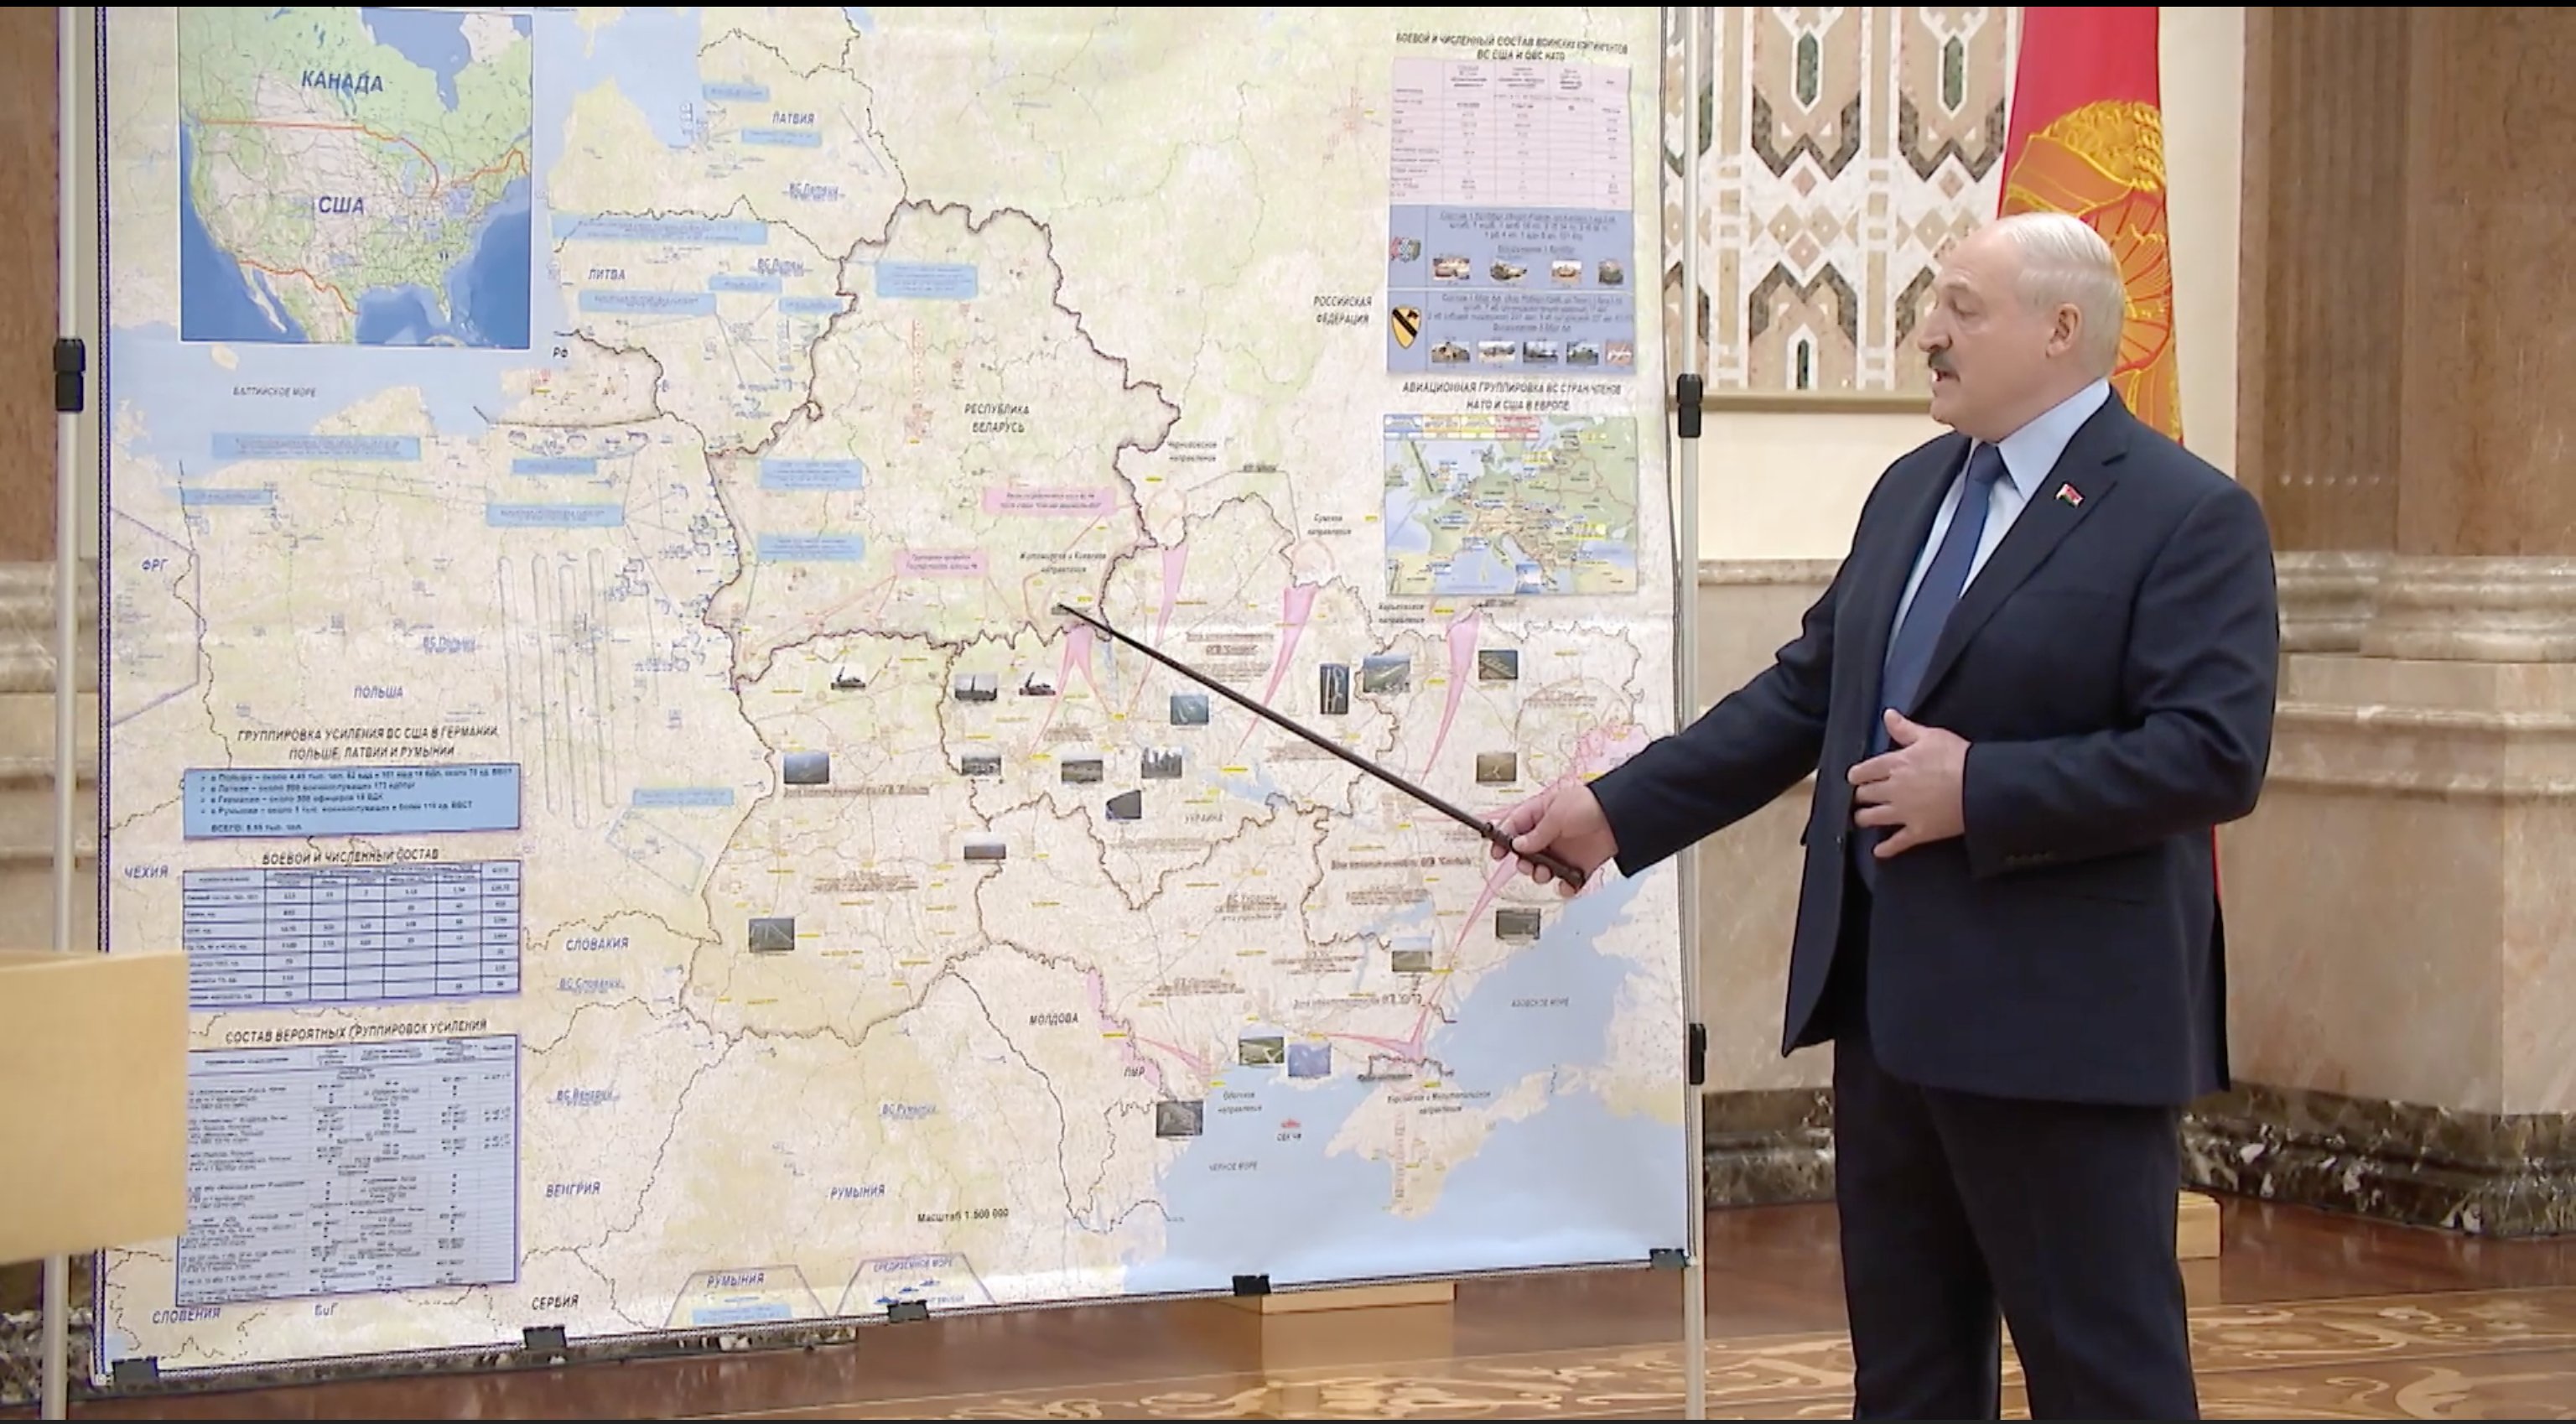 Показать откуда нападение на беларусь. План нападения на Беларусь Лукашенко. Карта Лукашенко на Совбезе. Лукашенко показывает карту.